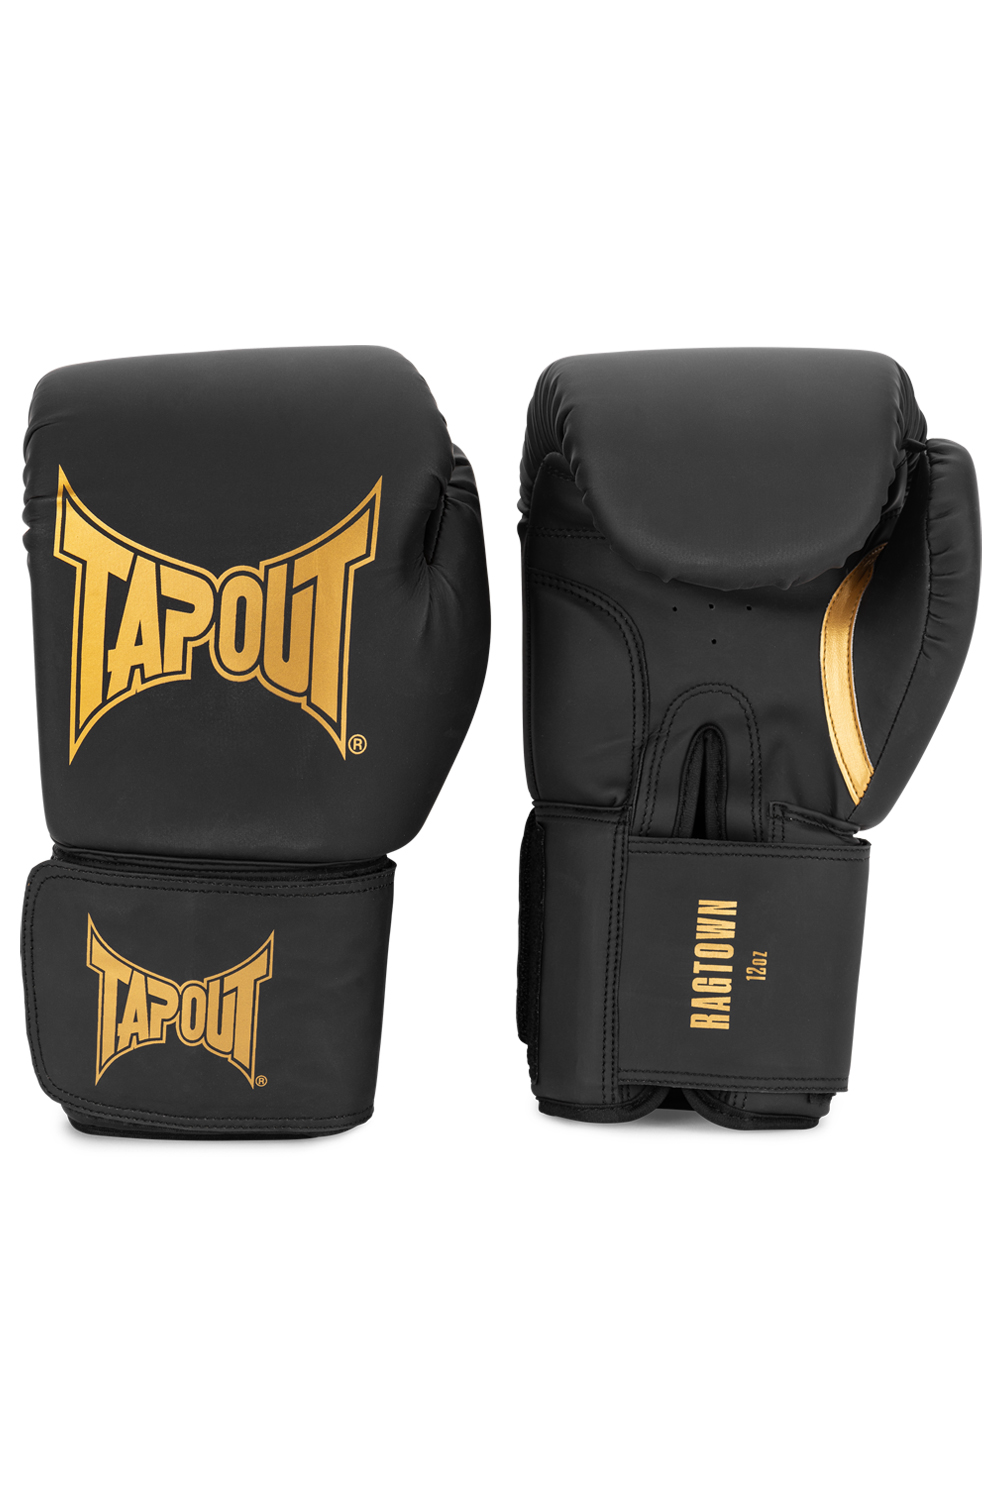 Levně Tapout Artificial leather boxing gloves (1pair)